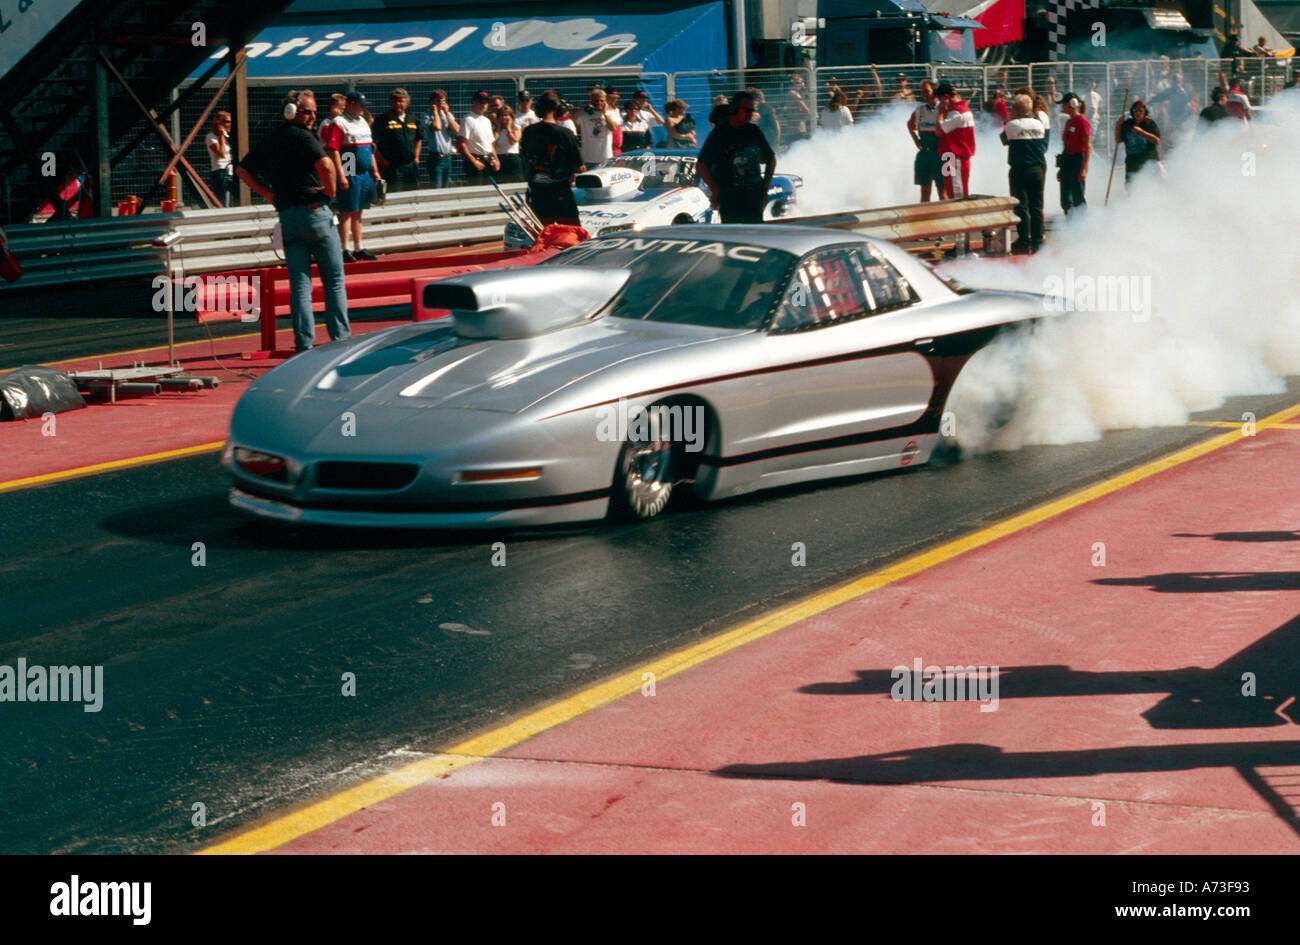 Pontiac Firebird Pro Stock car Adrenaline rush extreme risk danger Stock  Photo - Alamy